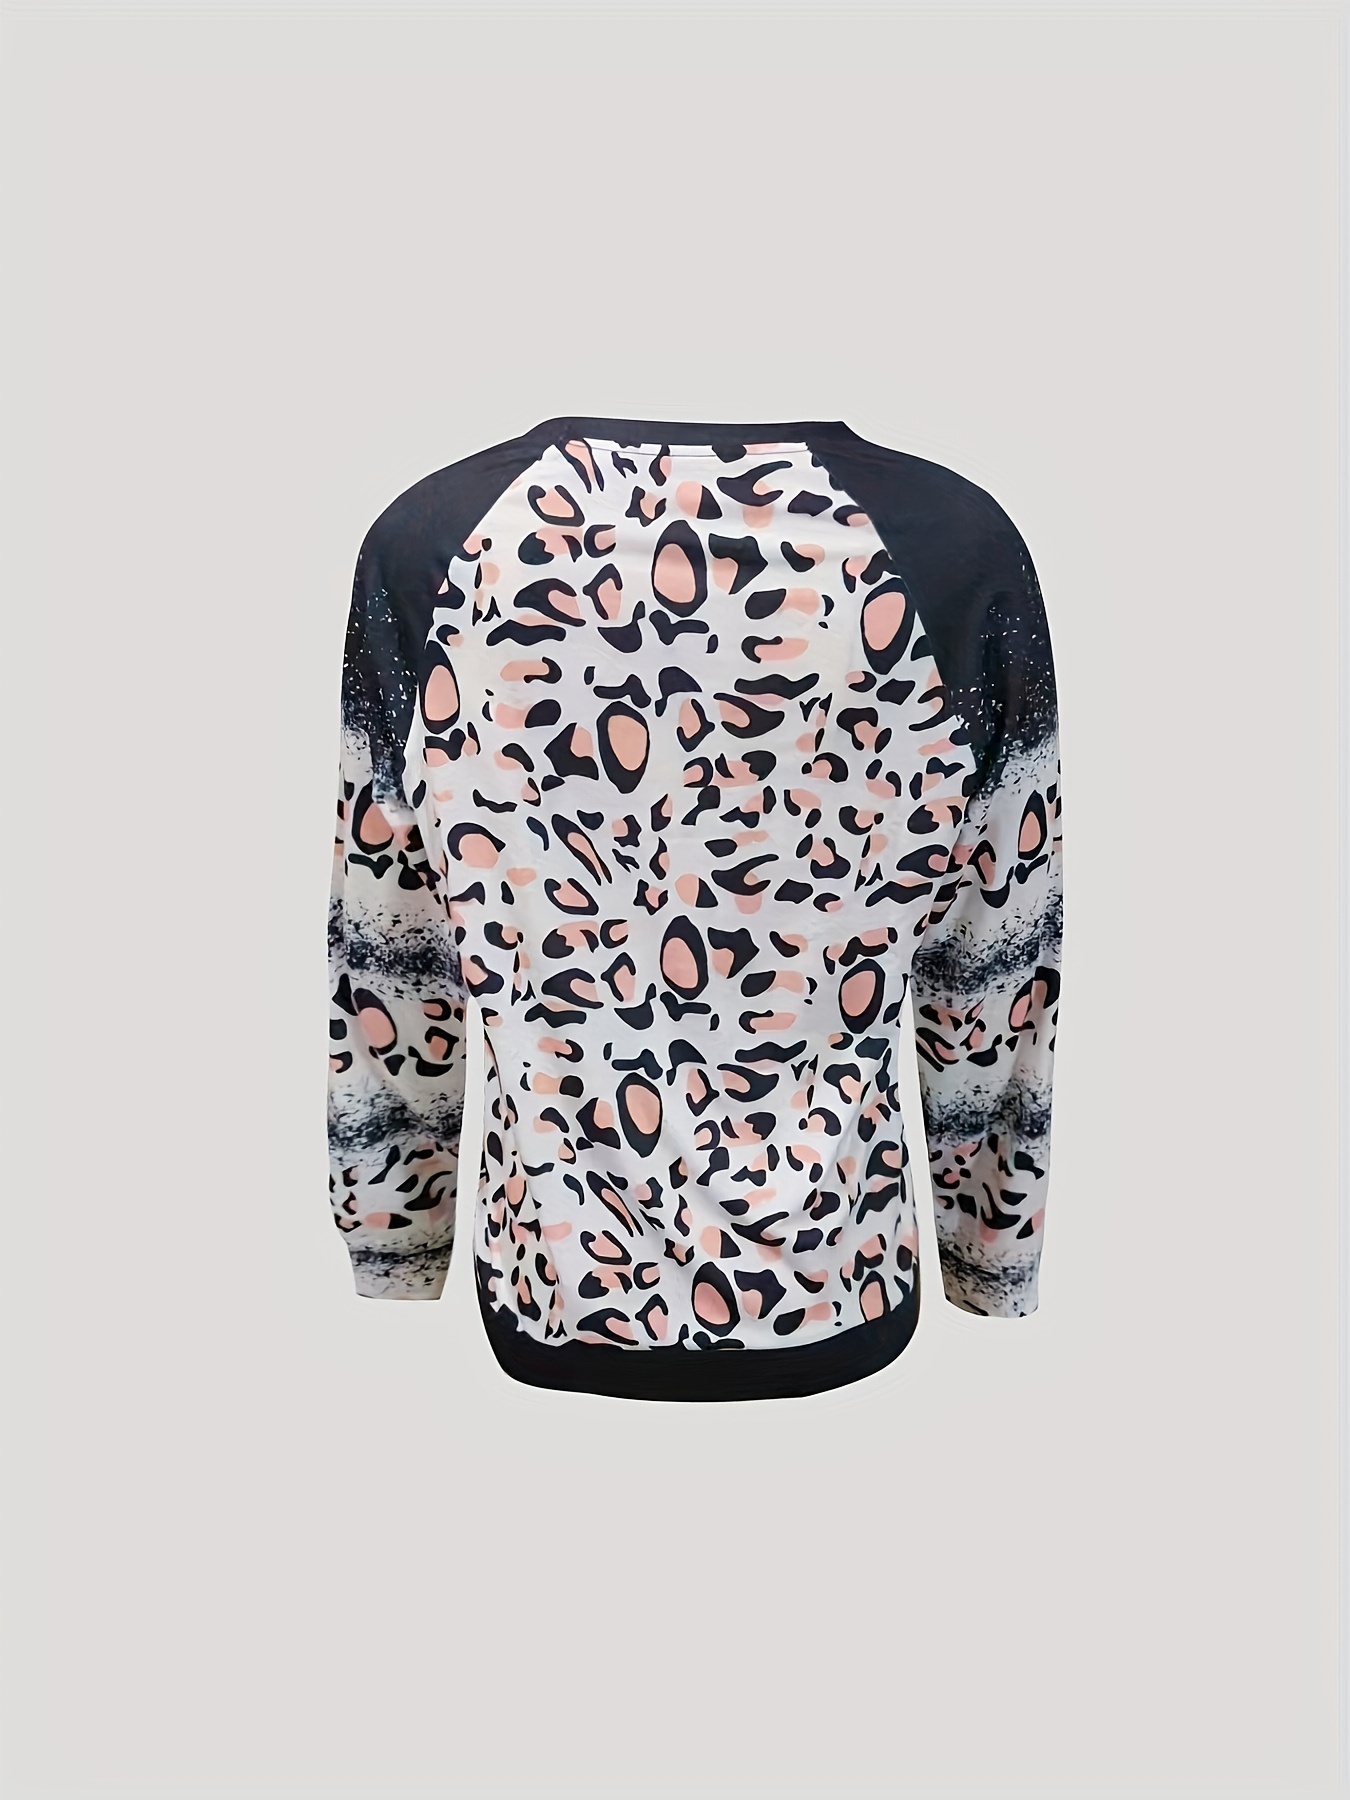 Leopard Print Heart Black and Gray Animal Print Sweatshirt